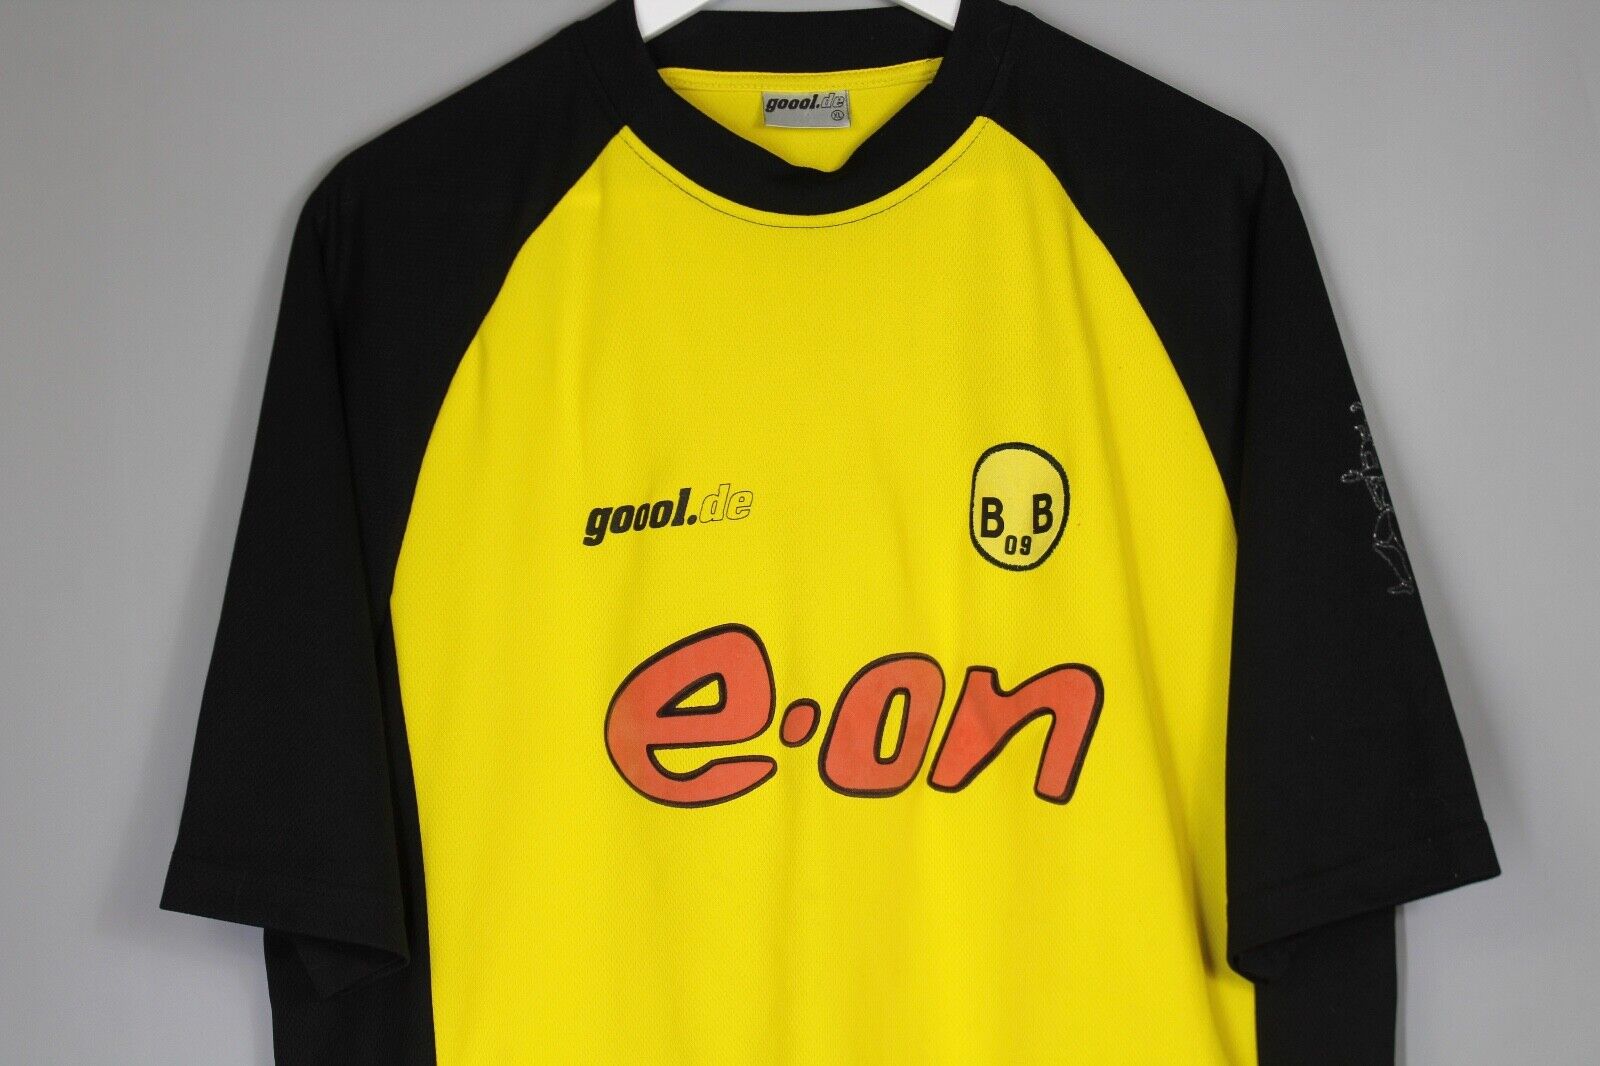 Retro Borussia Dortmund Home Jersey 2002 By goool.de